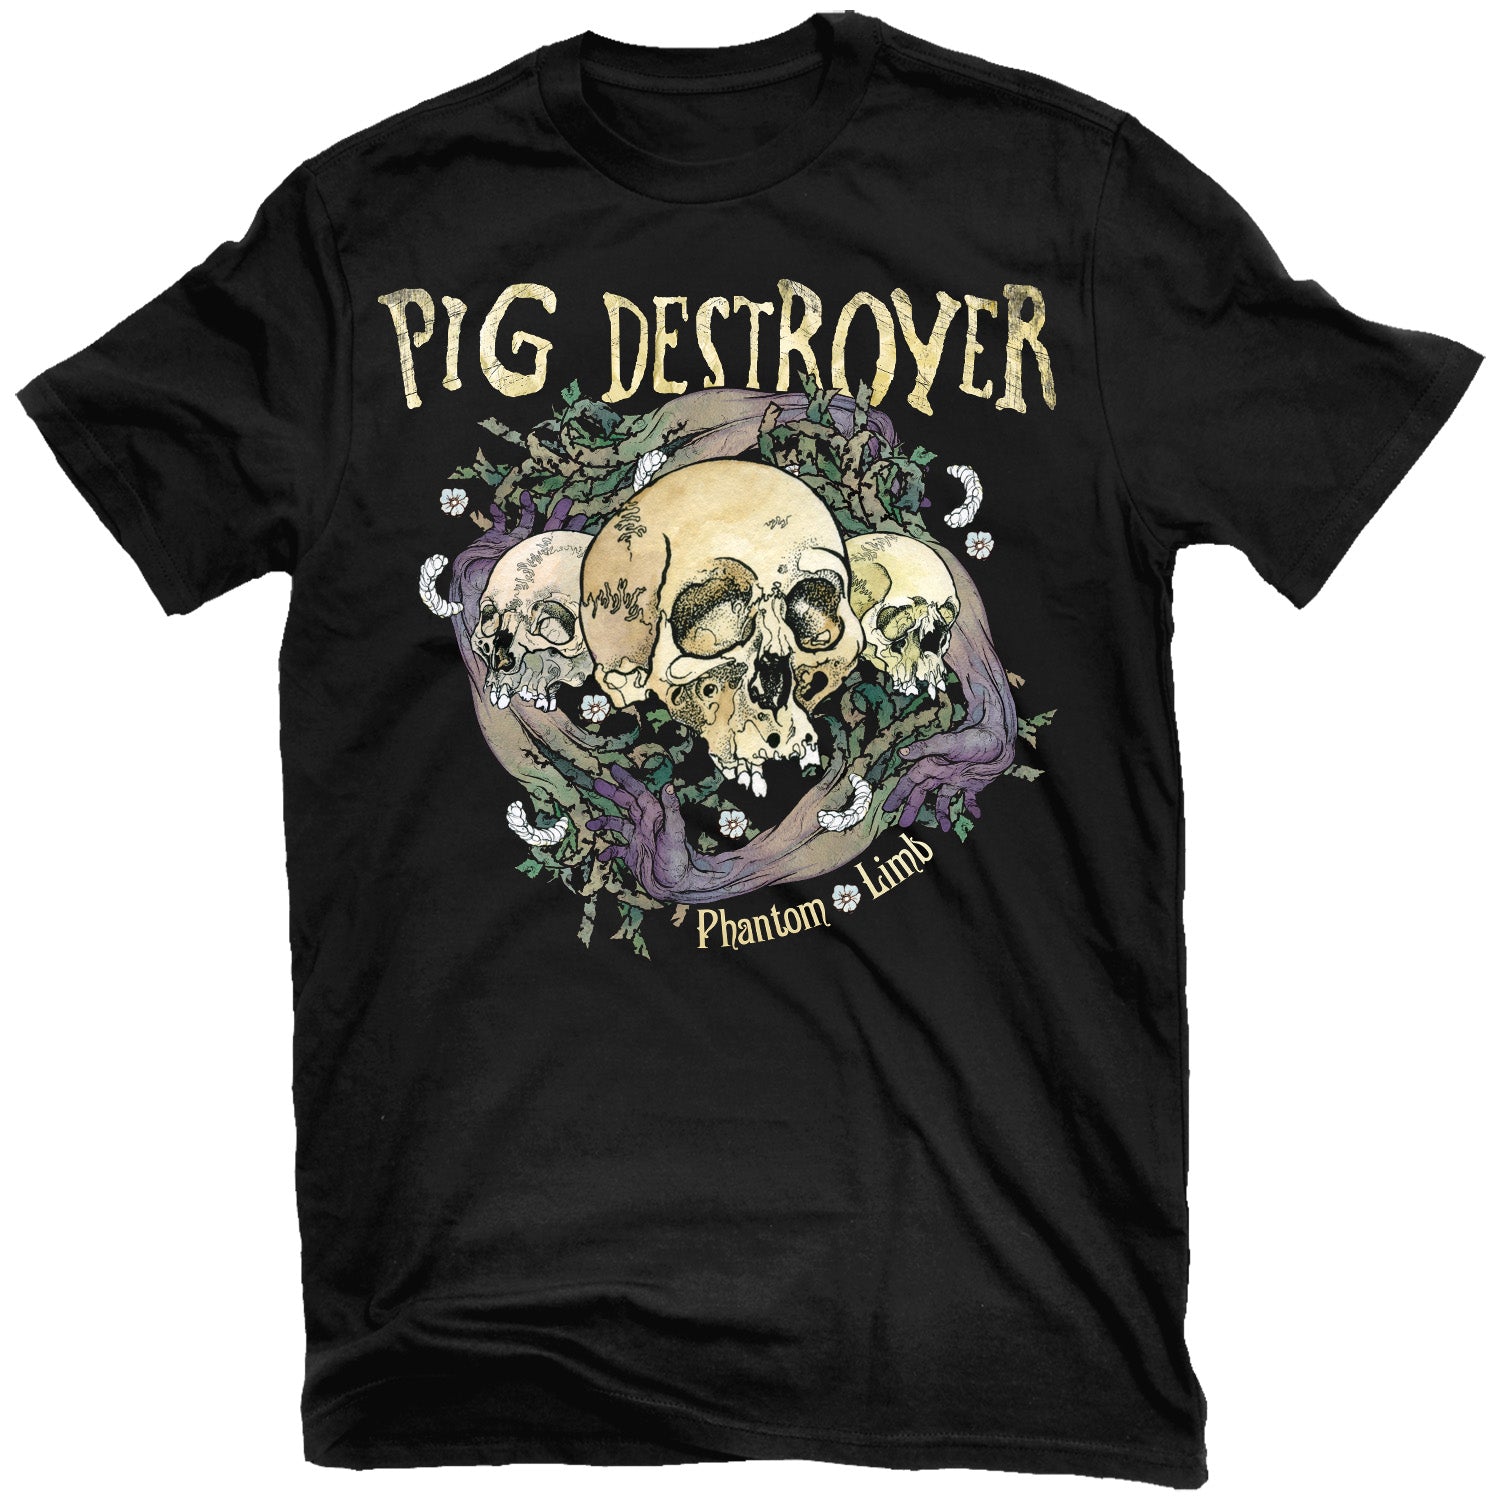 Pig Destroyer "Phantom Limb" T-Shirt